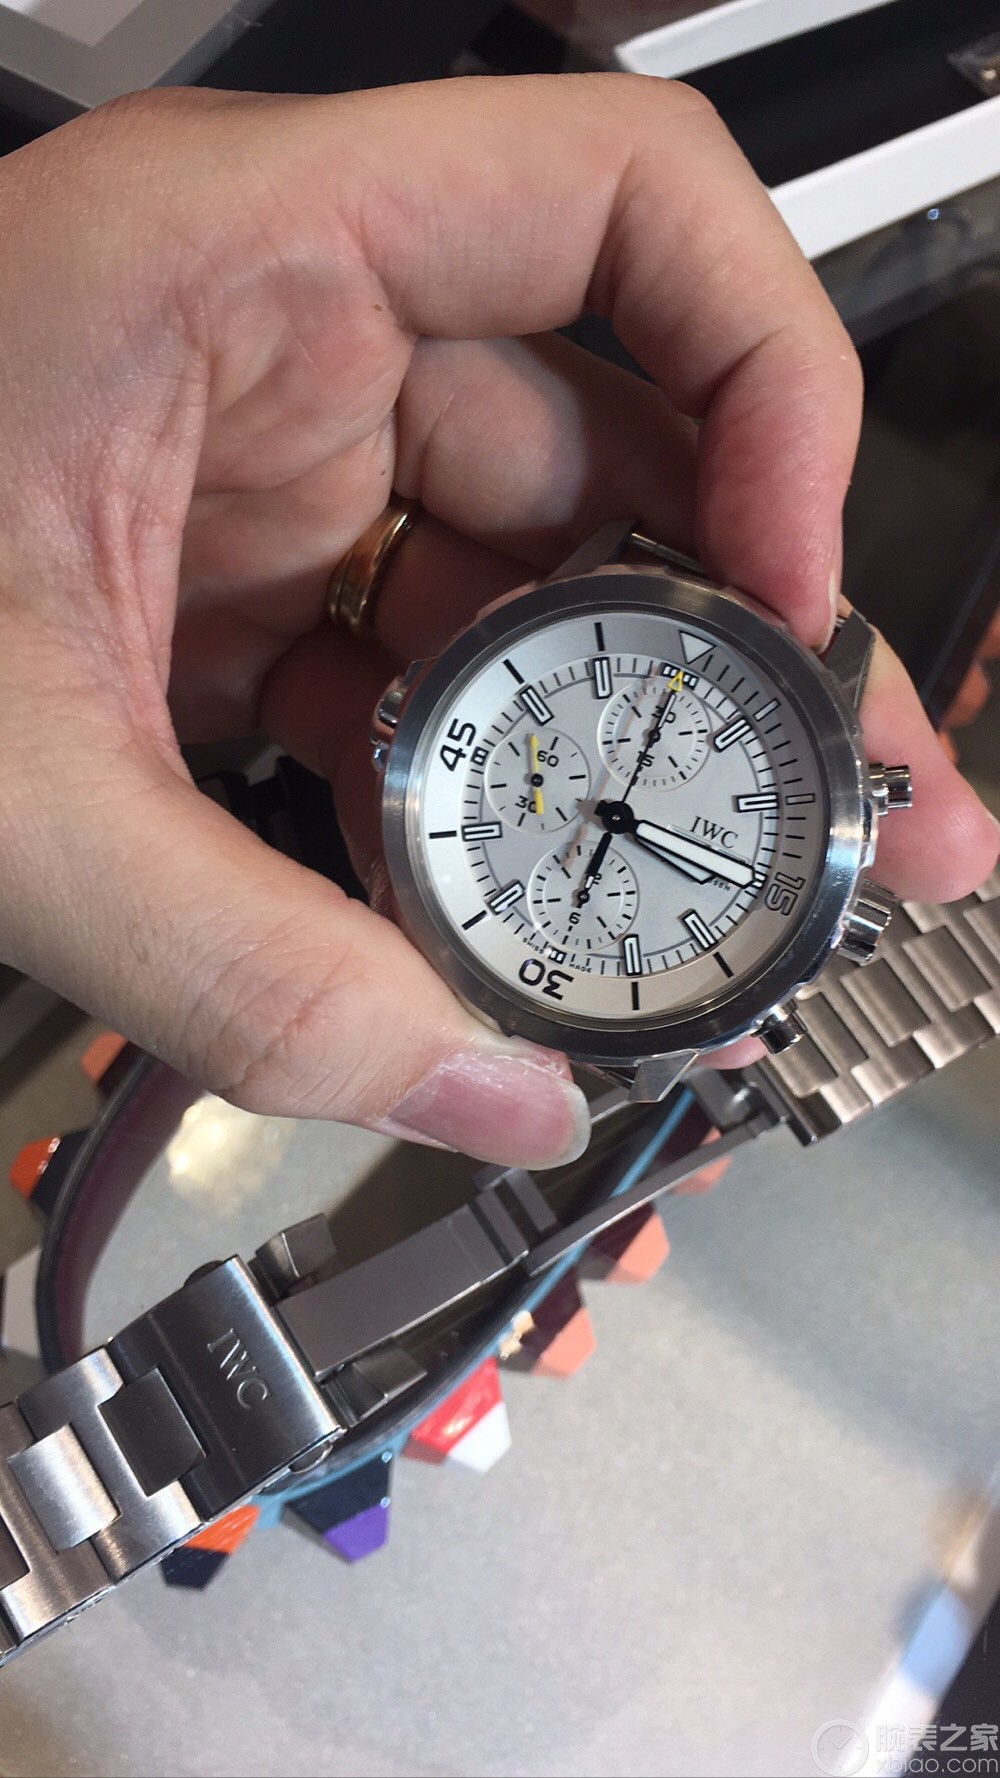 iwc万国表手表 海洋时计系列 chronograph计时腕表 系列 iw376801